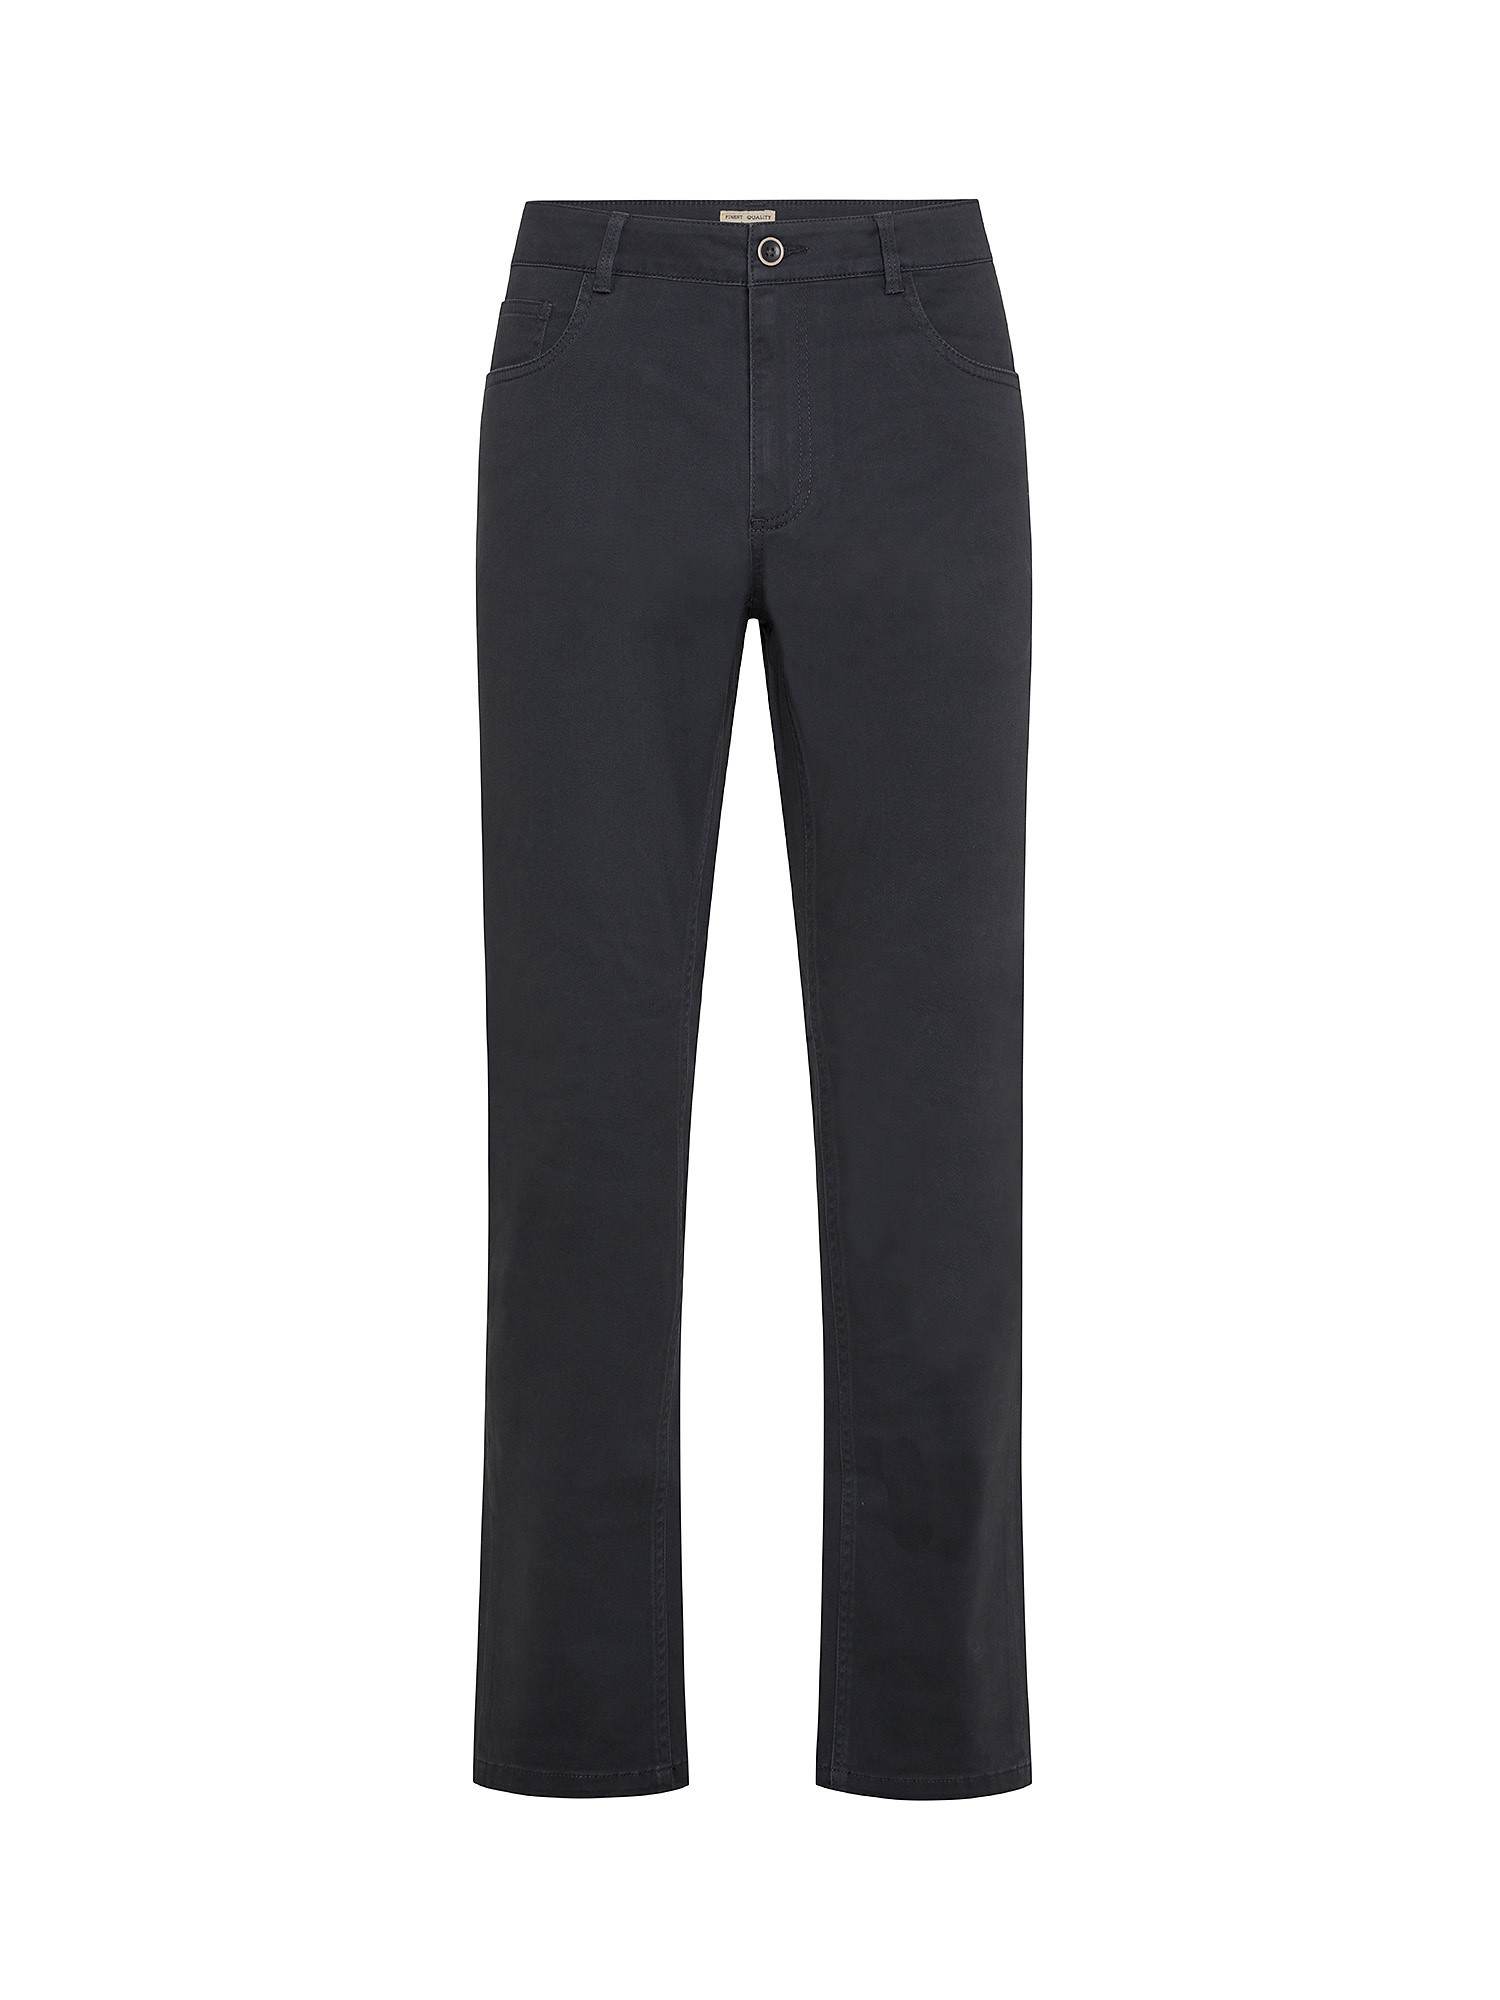 JCT - Five pocket trousers, Dark Blue, large image number 0